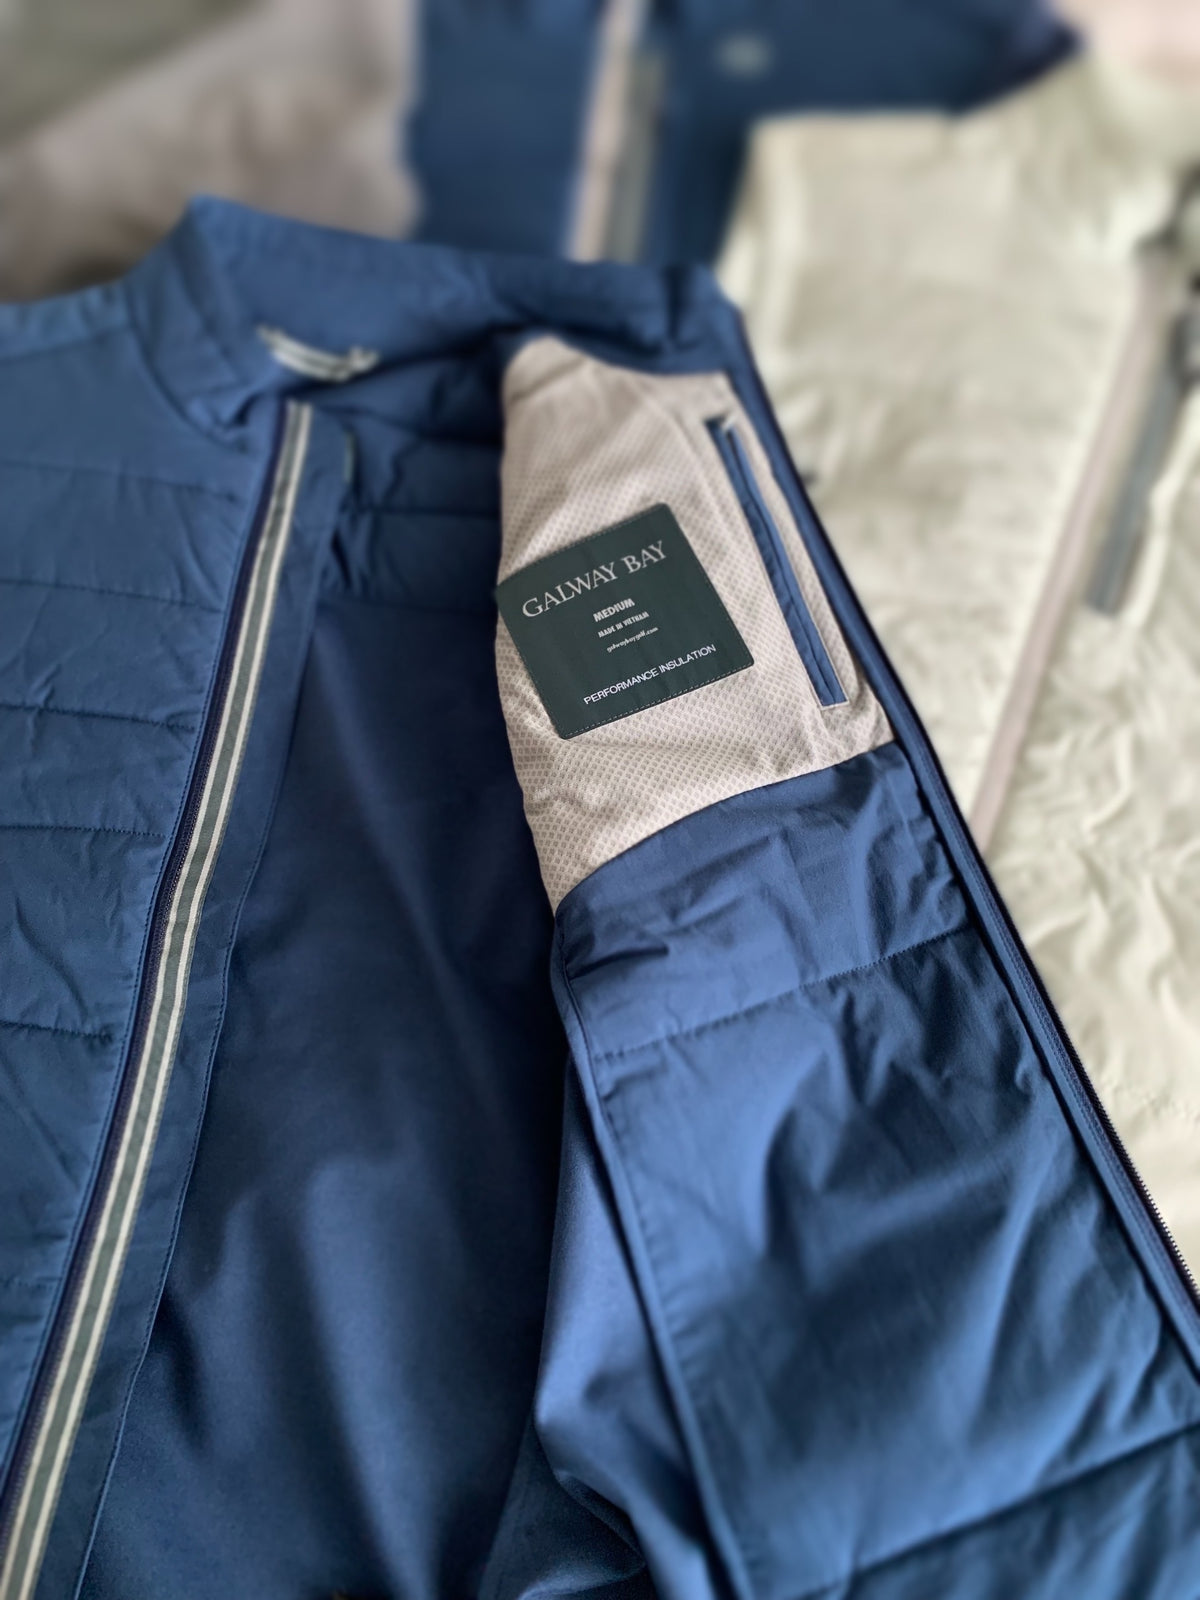 Oranmore Hybrid Golf Jacket | Golf Jacket | Galway Bay Apparel LLC